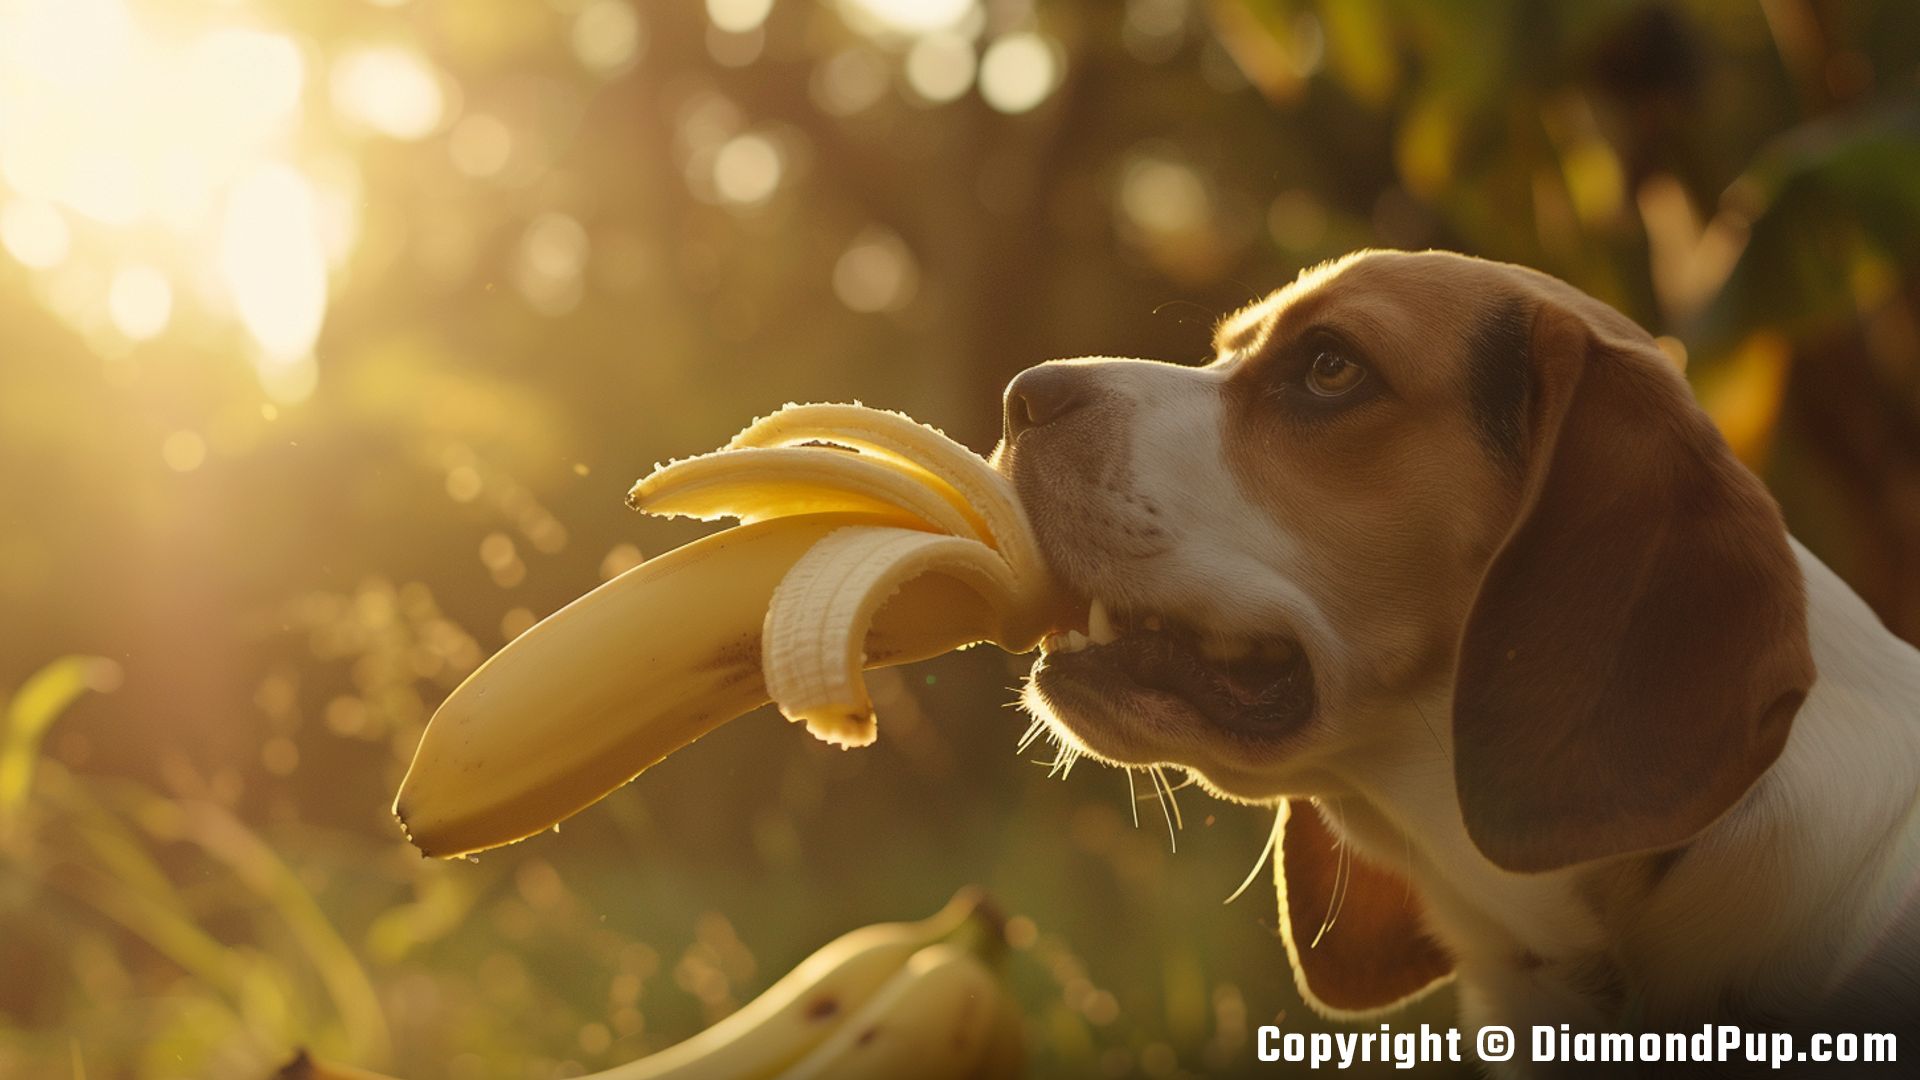 Photograph of Beagle Eating Banana